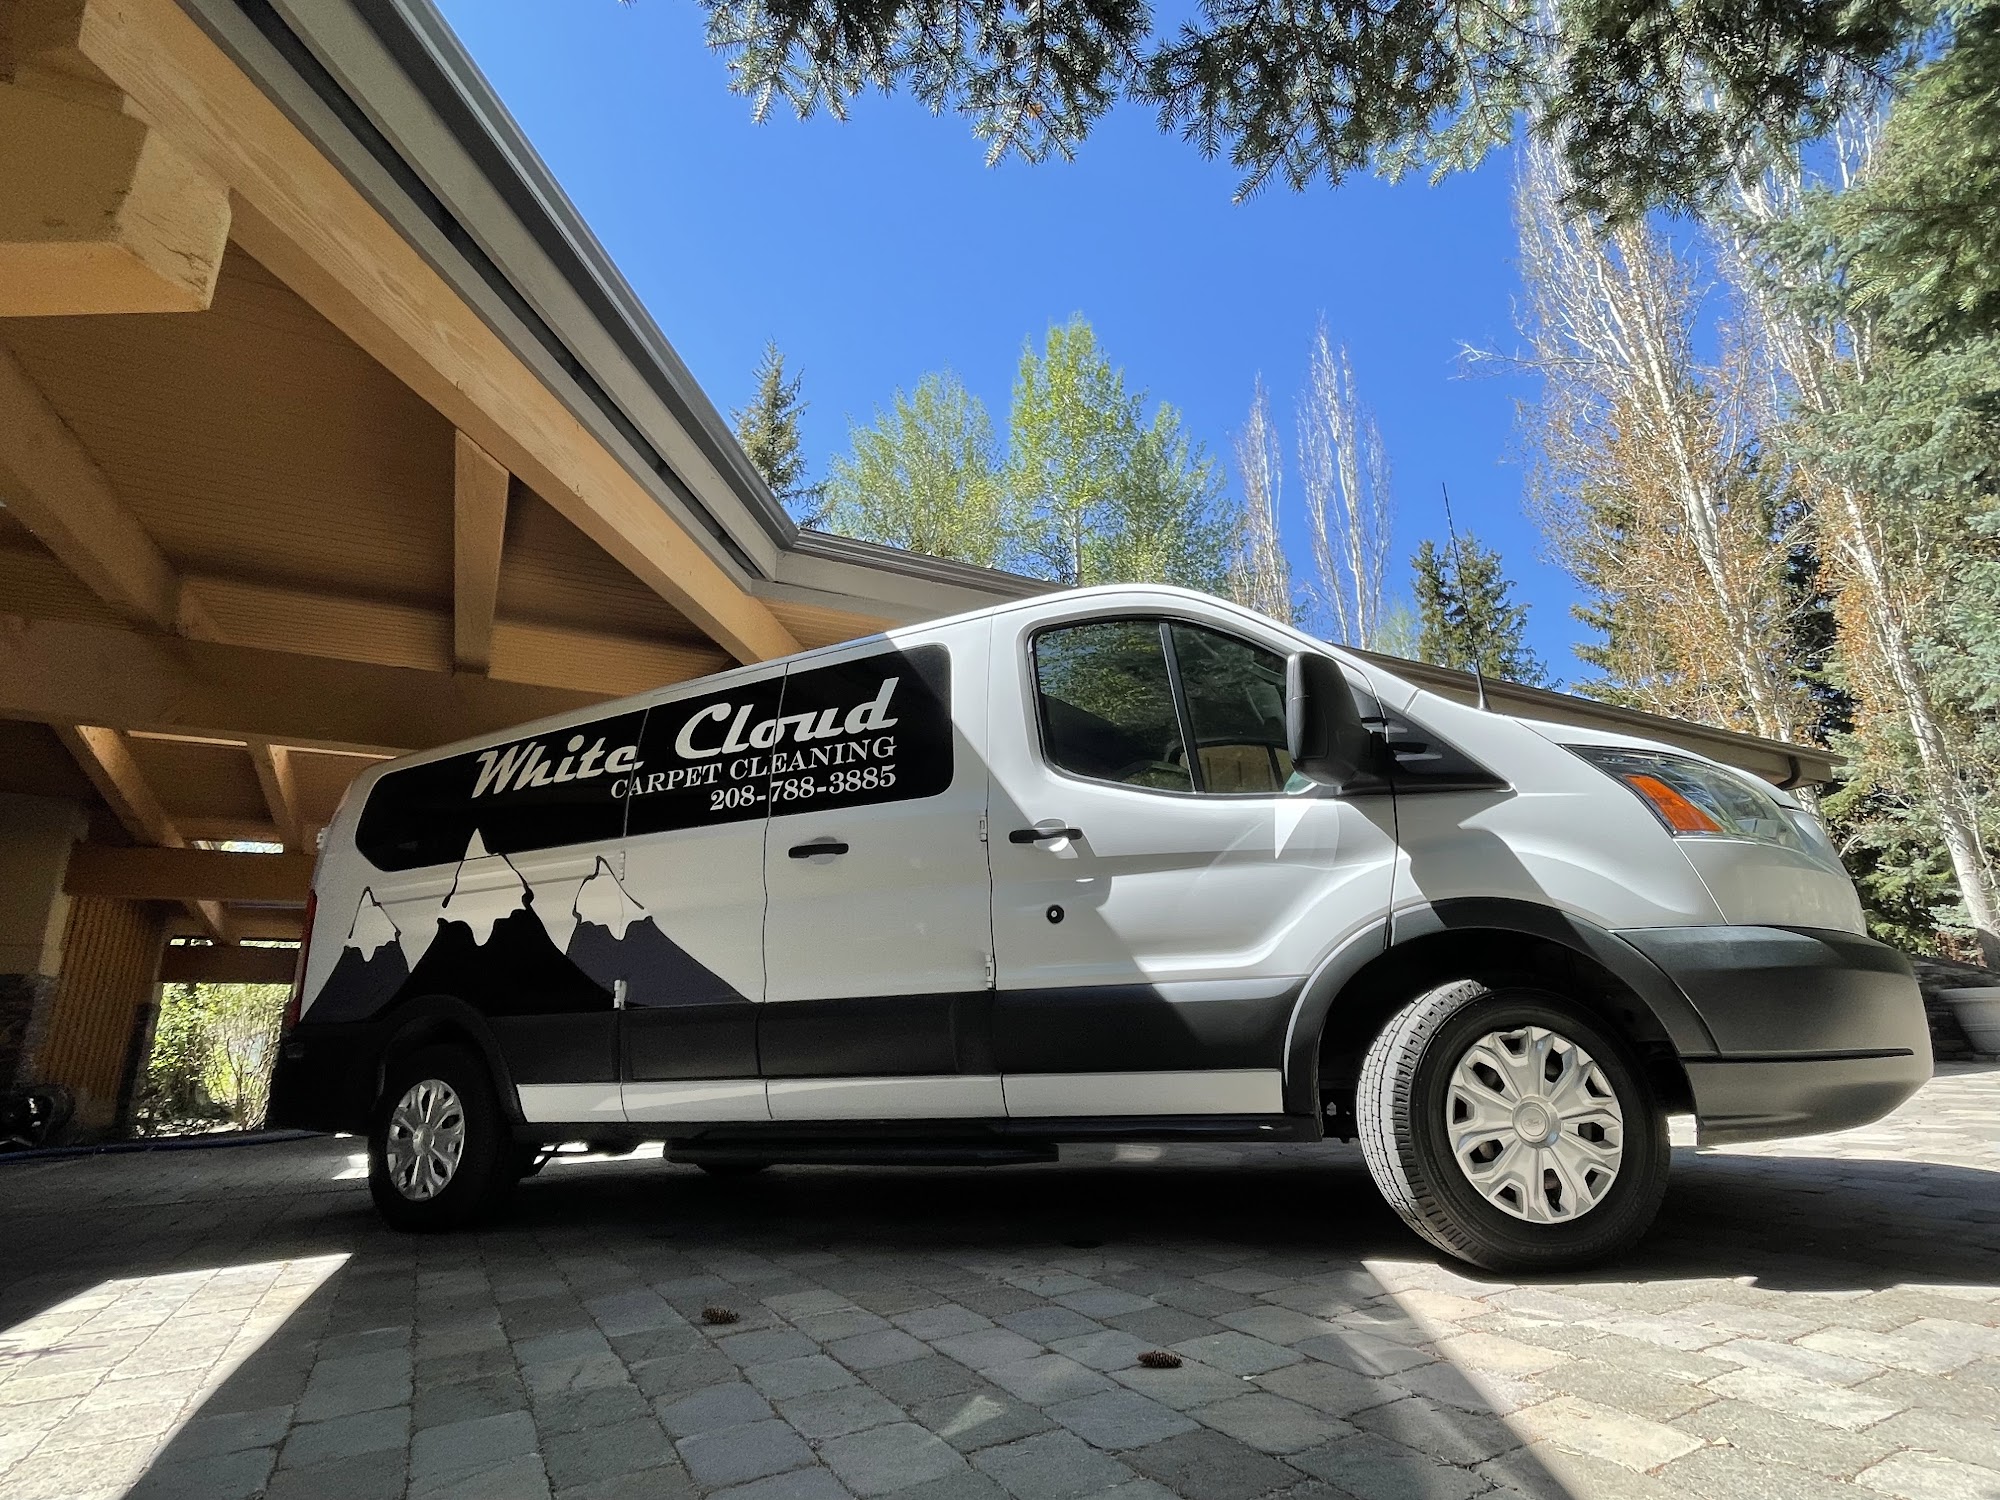 White Cloud Carpet Cleaning 1030 Business Park Dr STE G, Hailey Idaho 83333